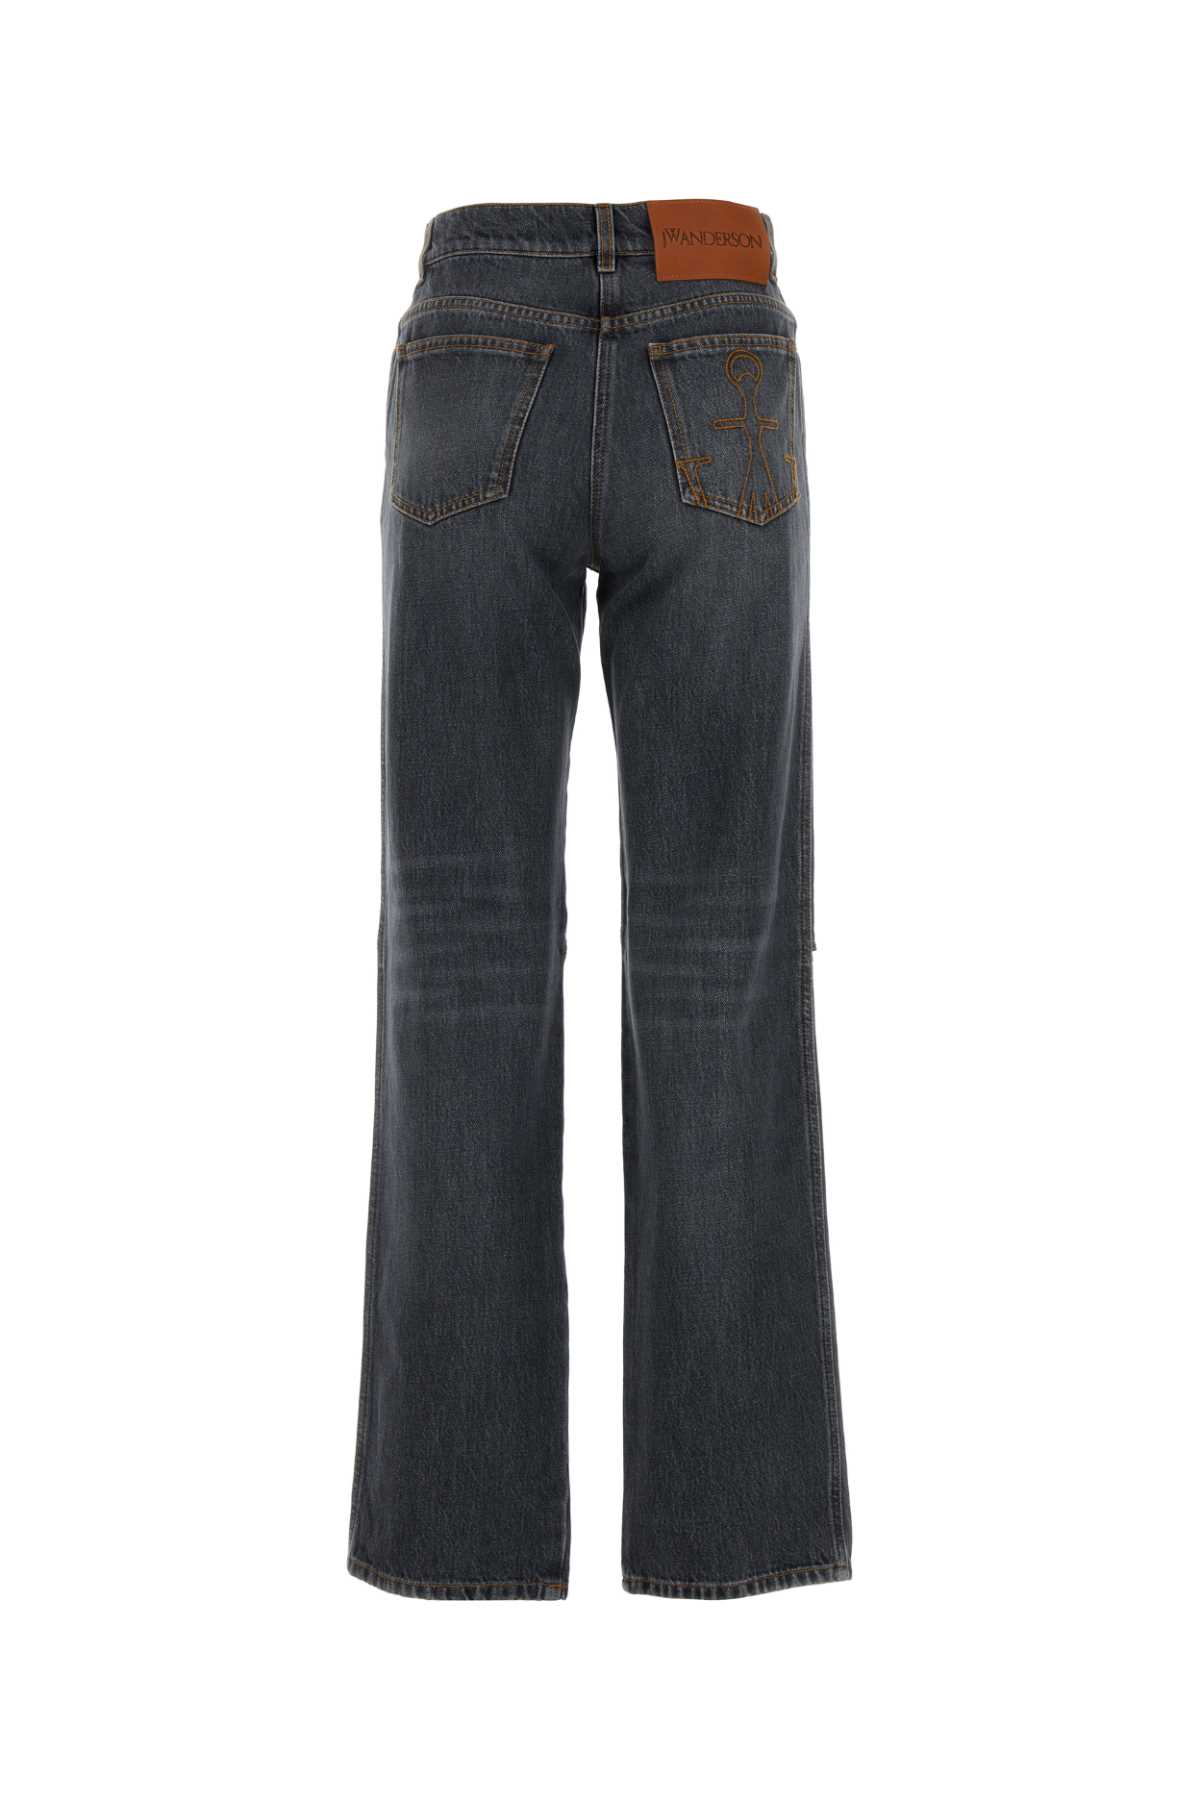 Jw Anderson Grey Denim Jeans In 929